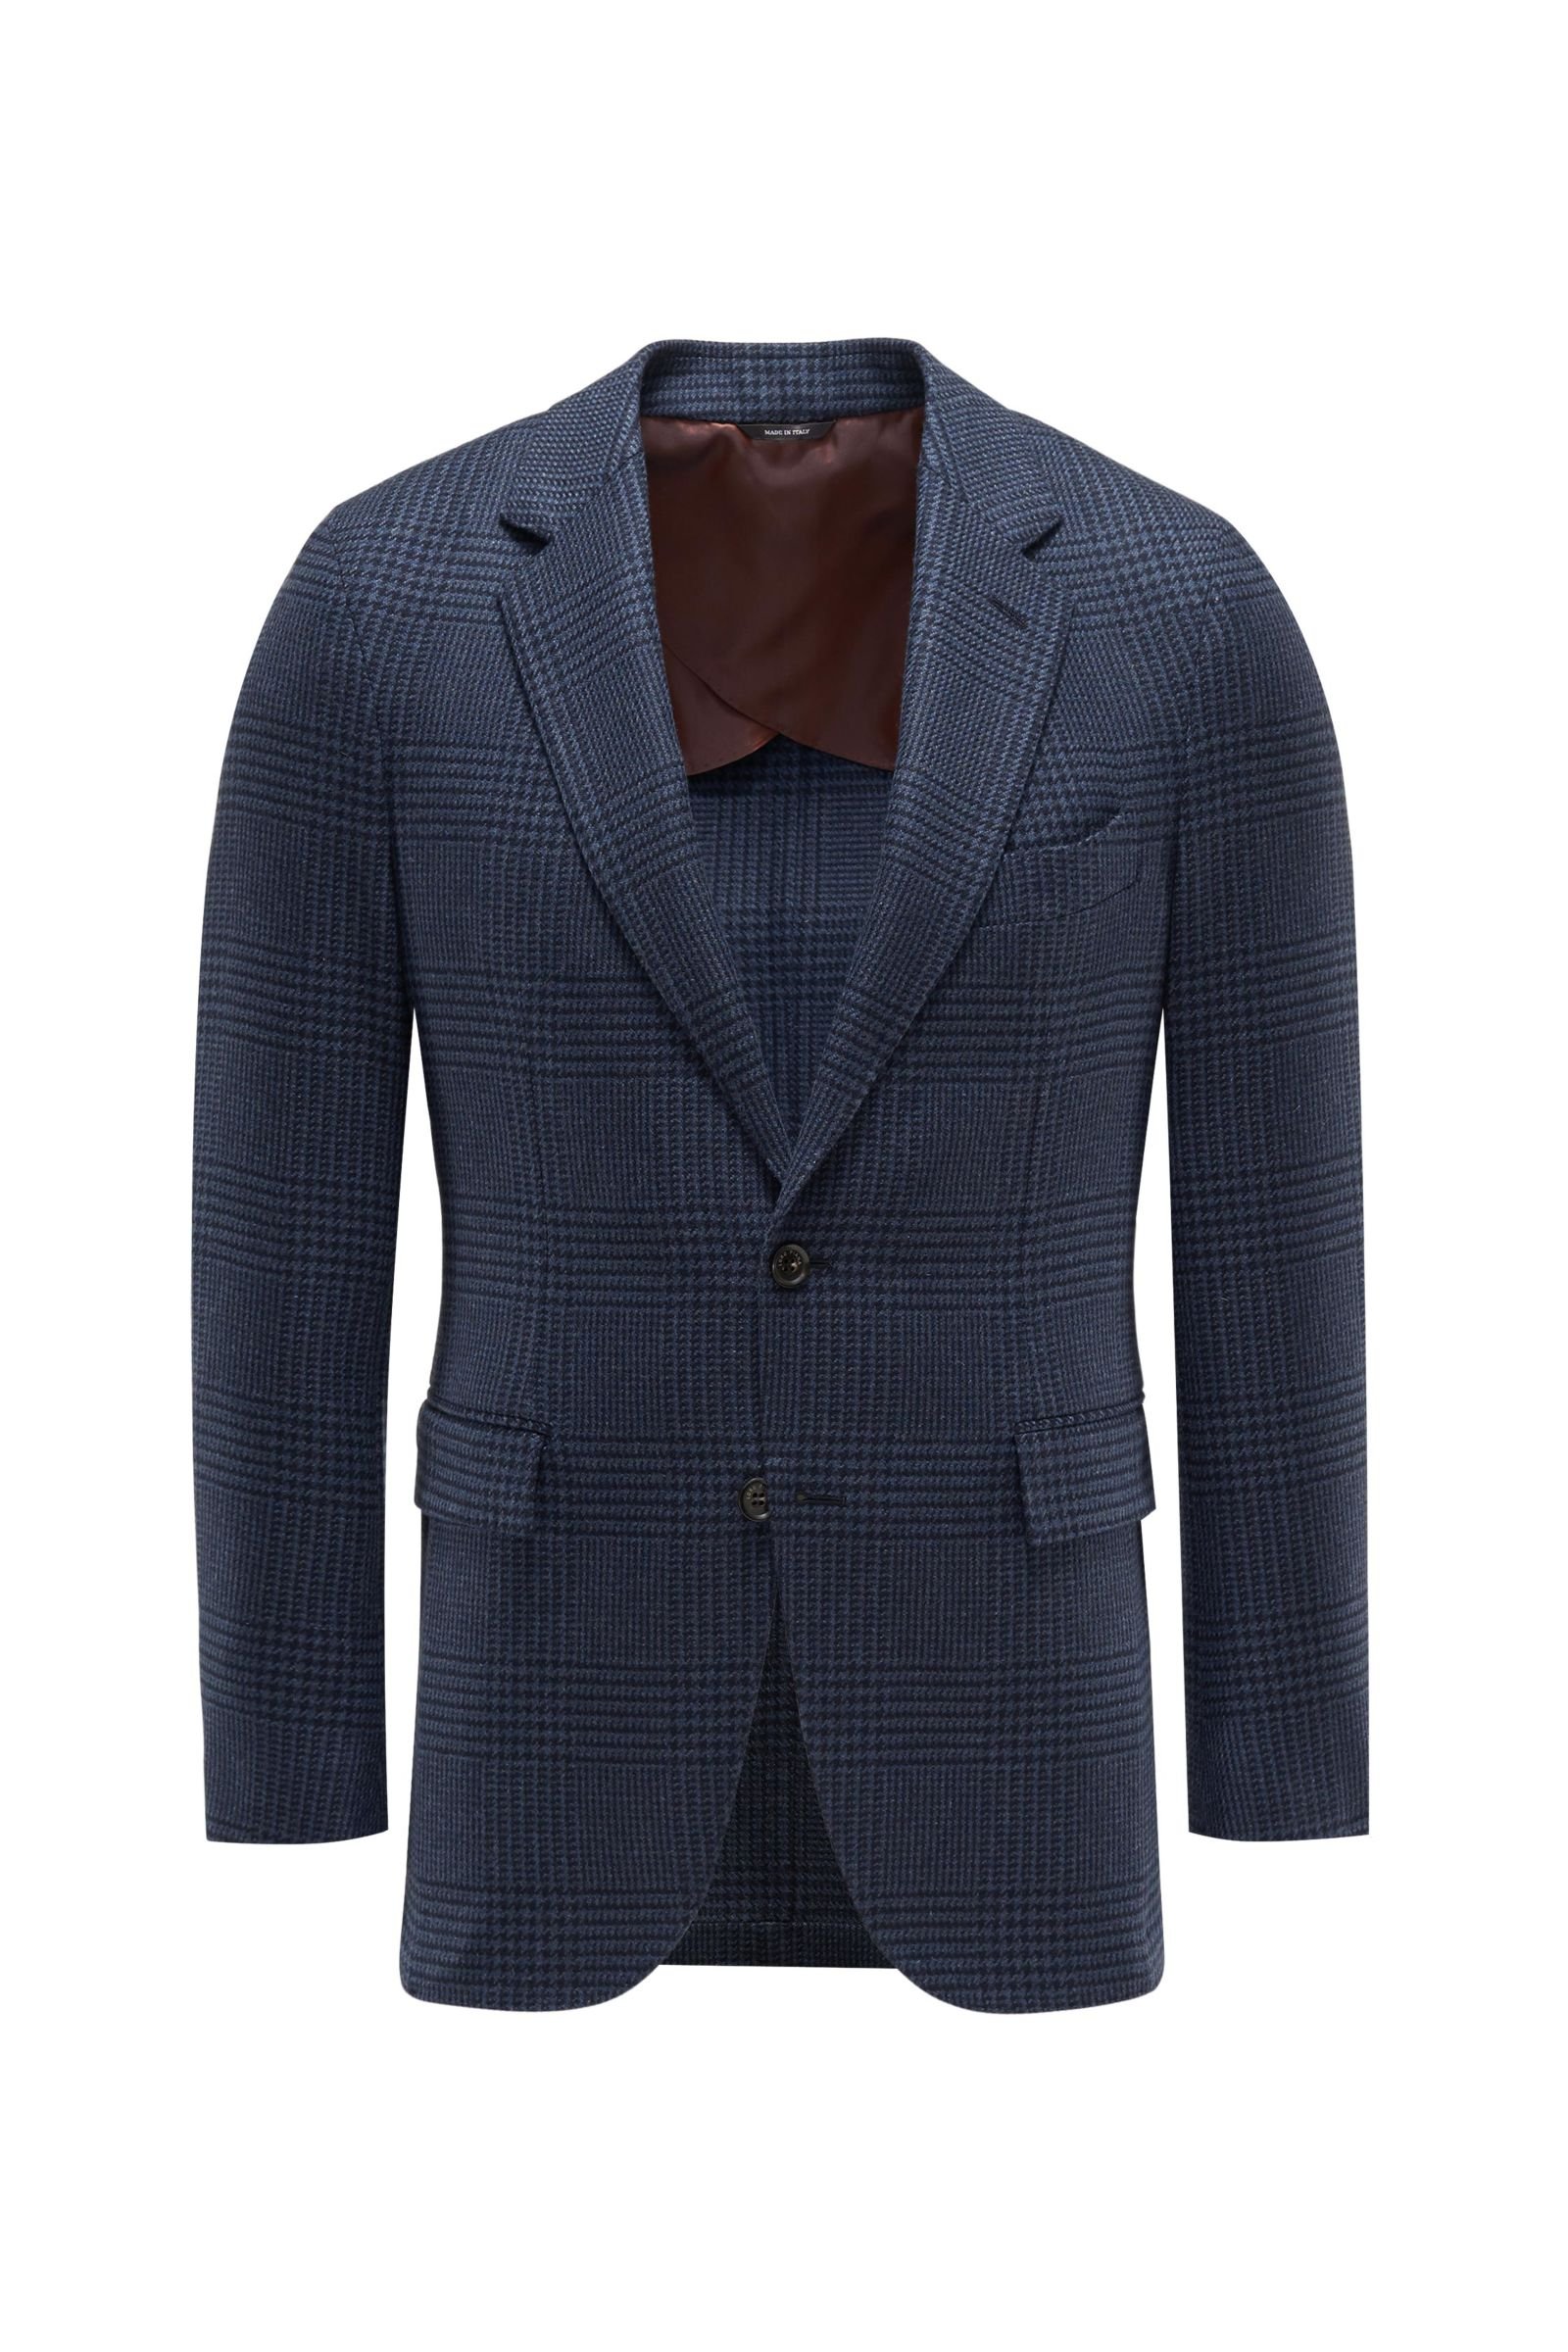 Baby cashmere smart-casual jacket 'Andorra' grey-blue/black checked